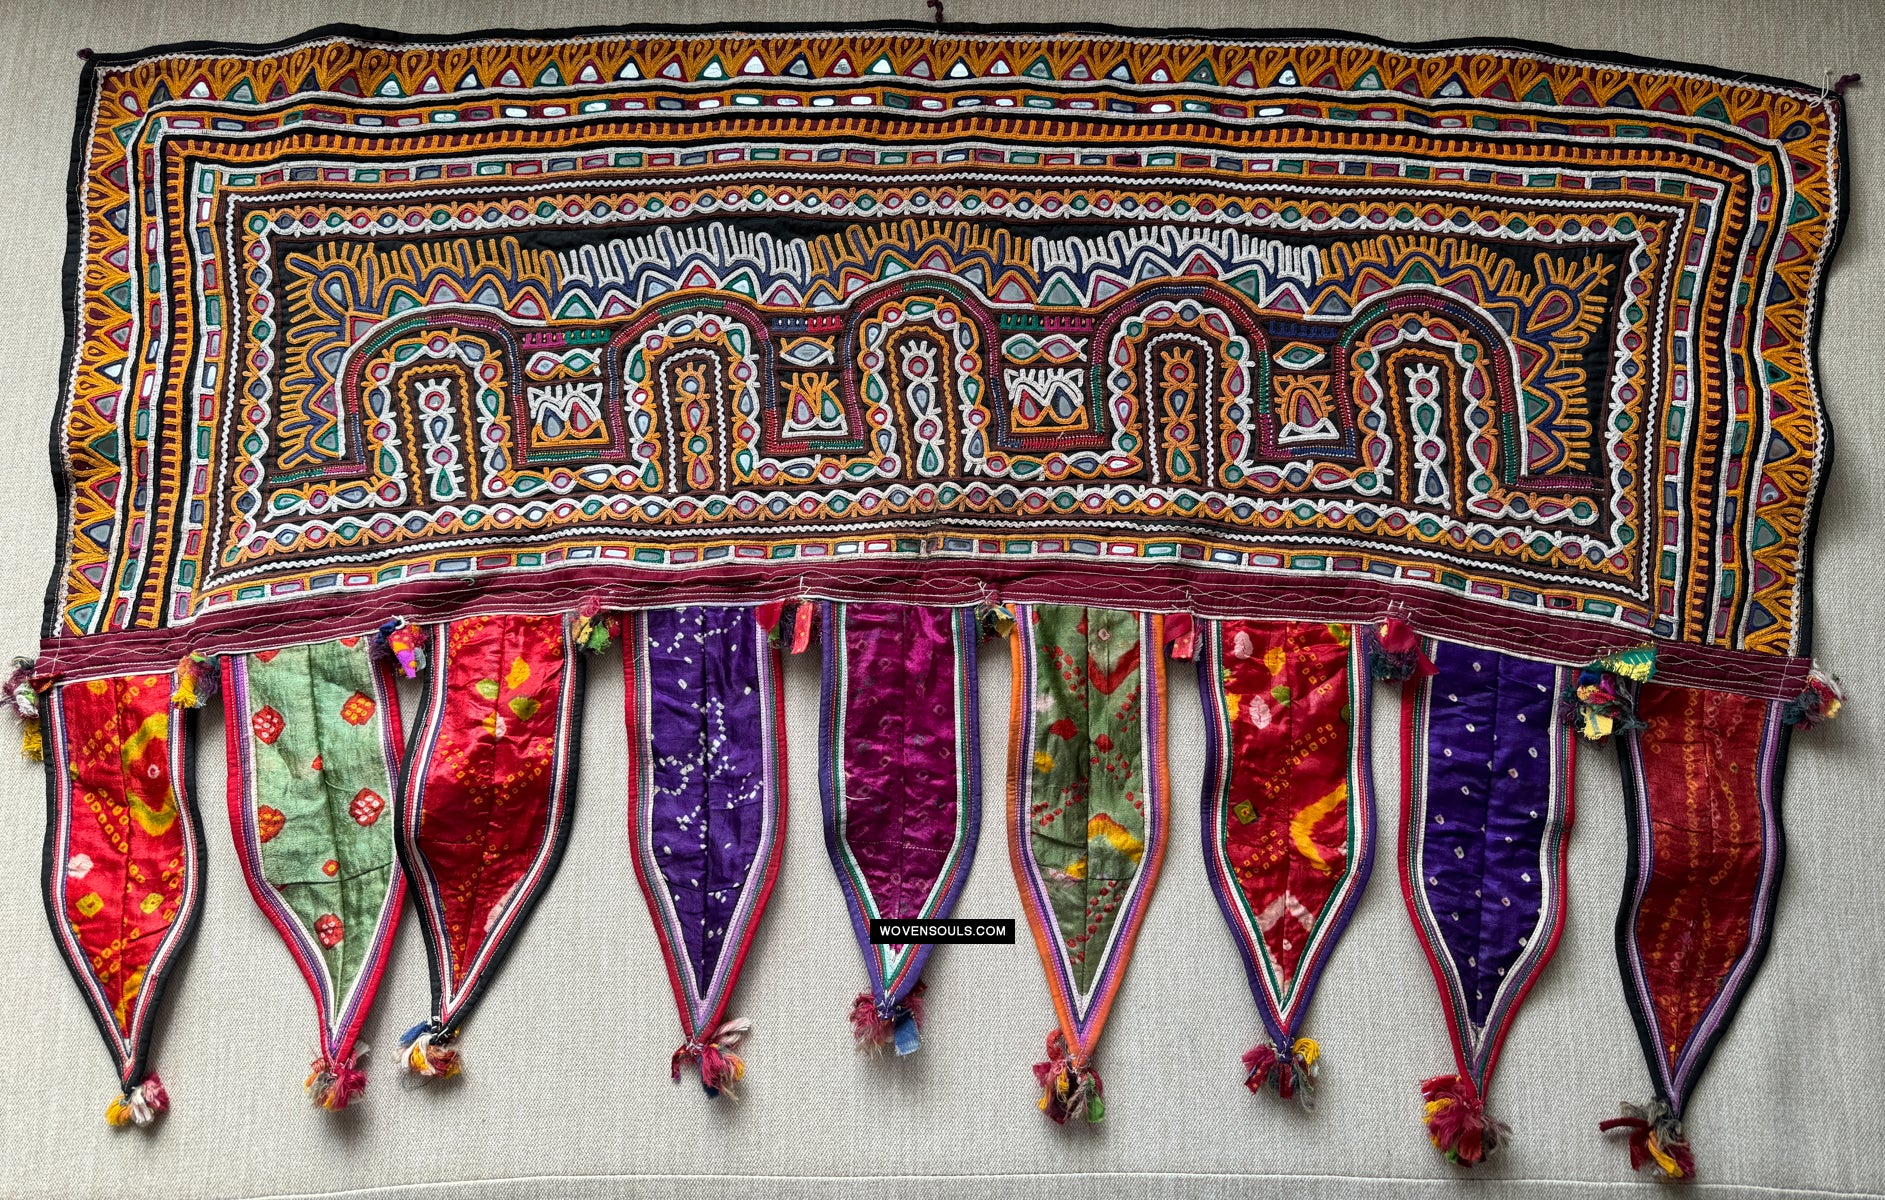 1962 Toran for Door - Vintage Rabari Embroidery Wall Decor Textile Art from Gujarat